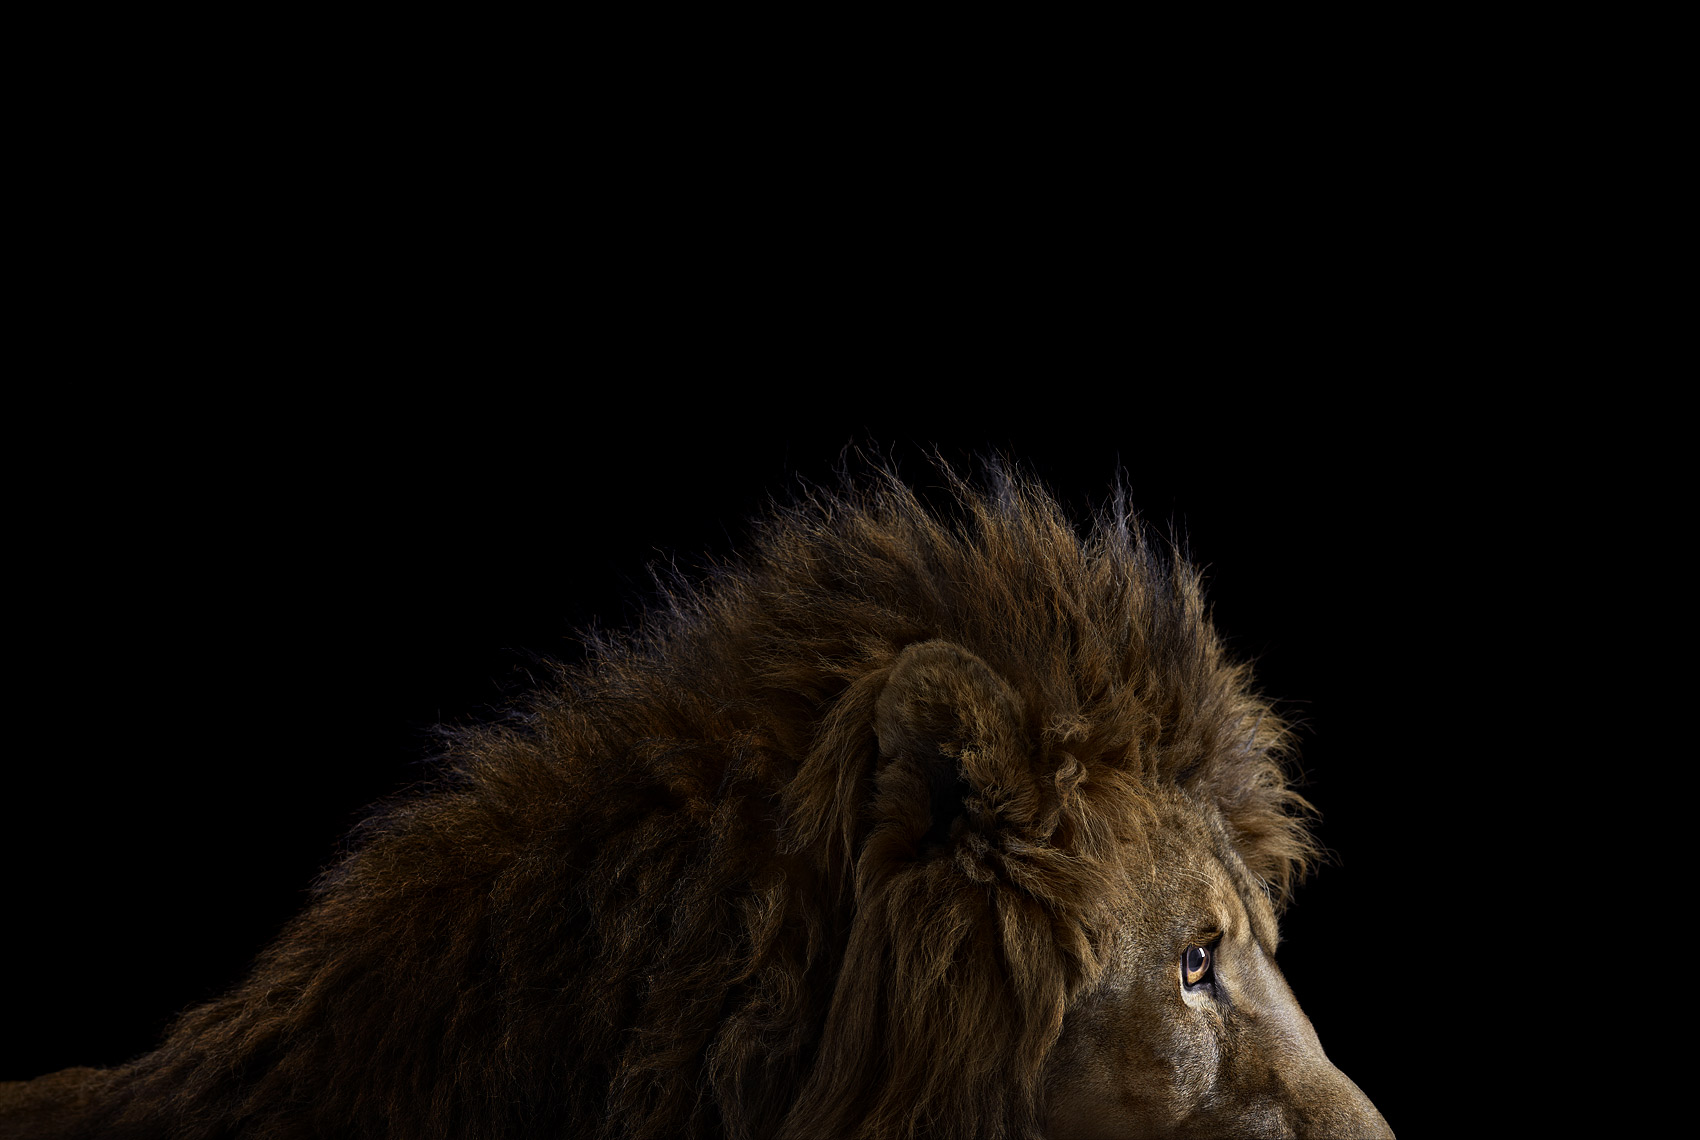 Lion studio profile portrait by animal photographer Brad Wilson